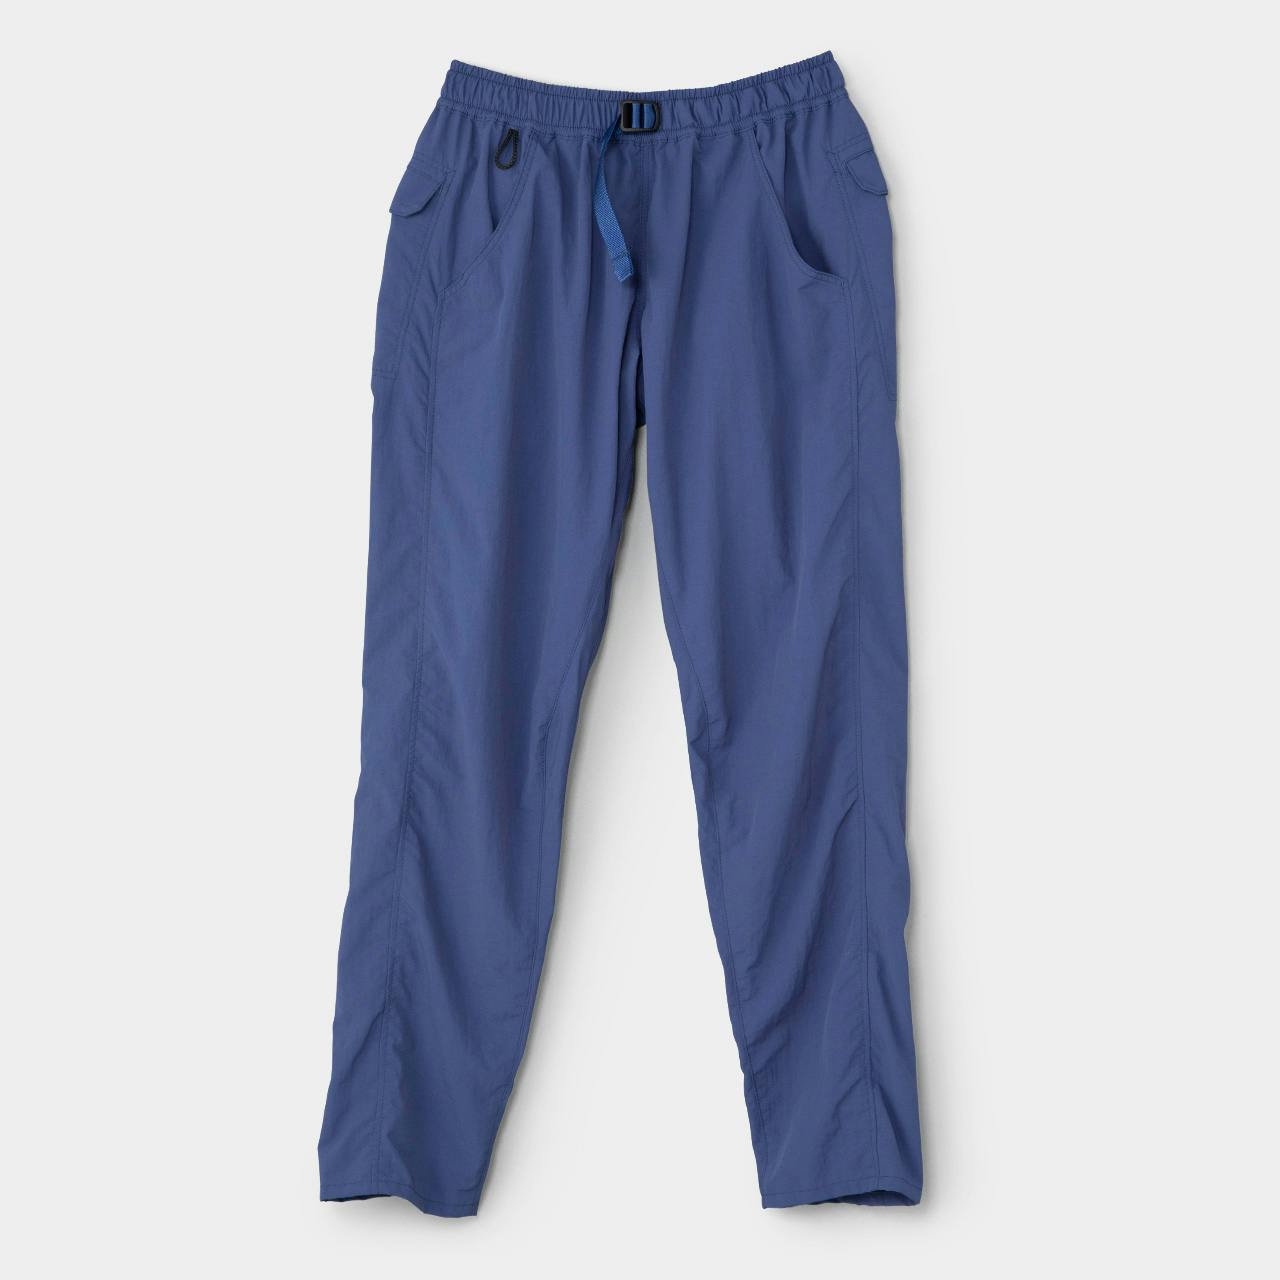 5-Pocket Pants (Men)<br>Origin of Yamatomichi Pants Series<br>For Sale Apr 17, 18:00 JST